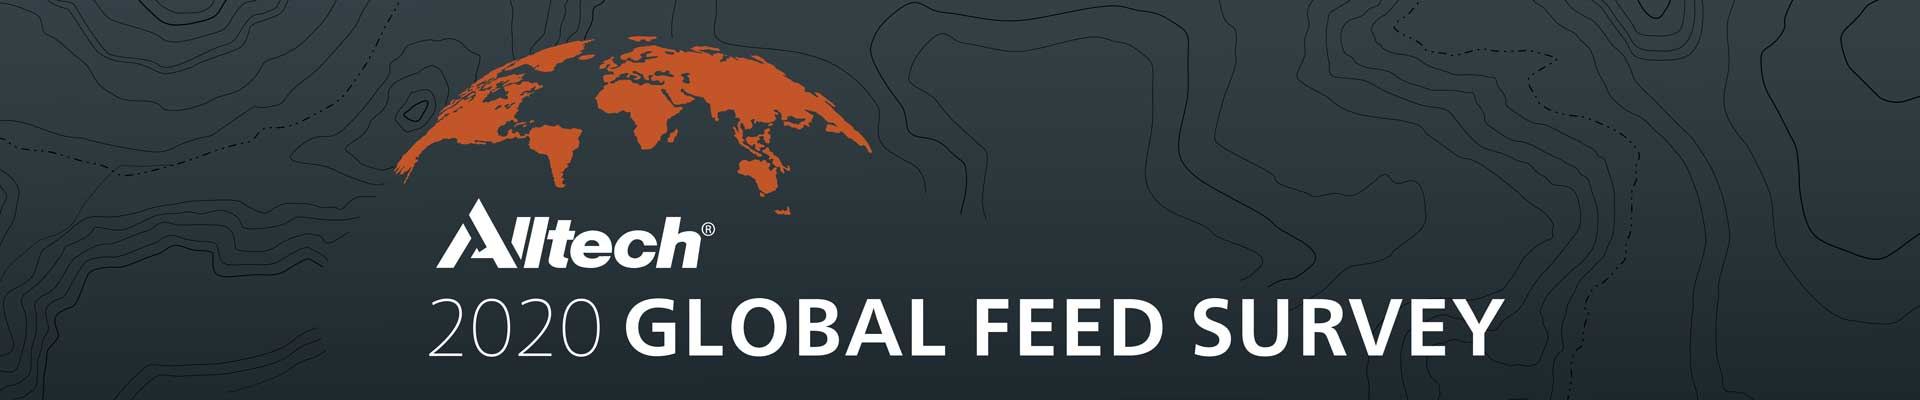 Alltech Global Feed Survey 2020 header image